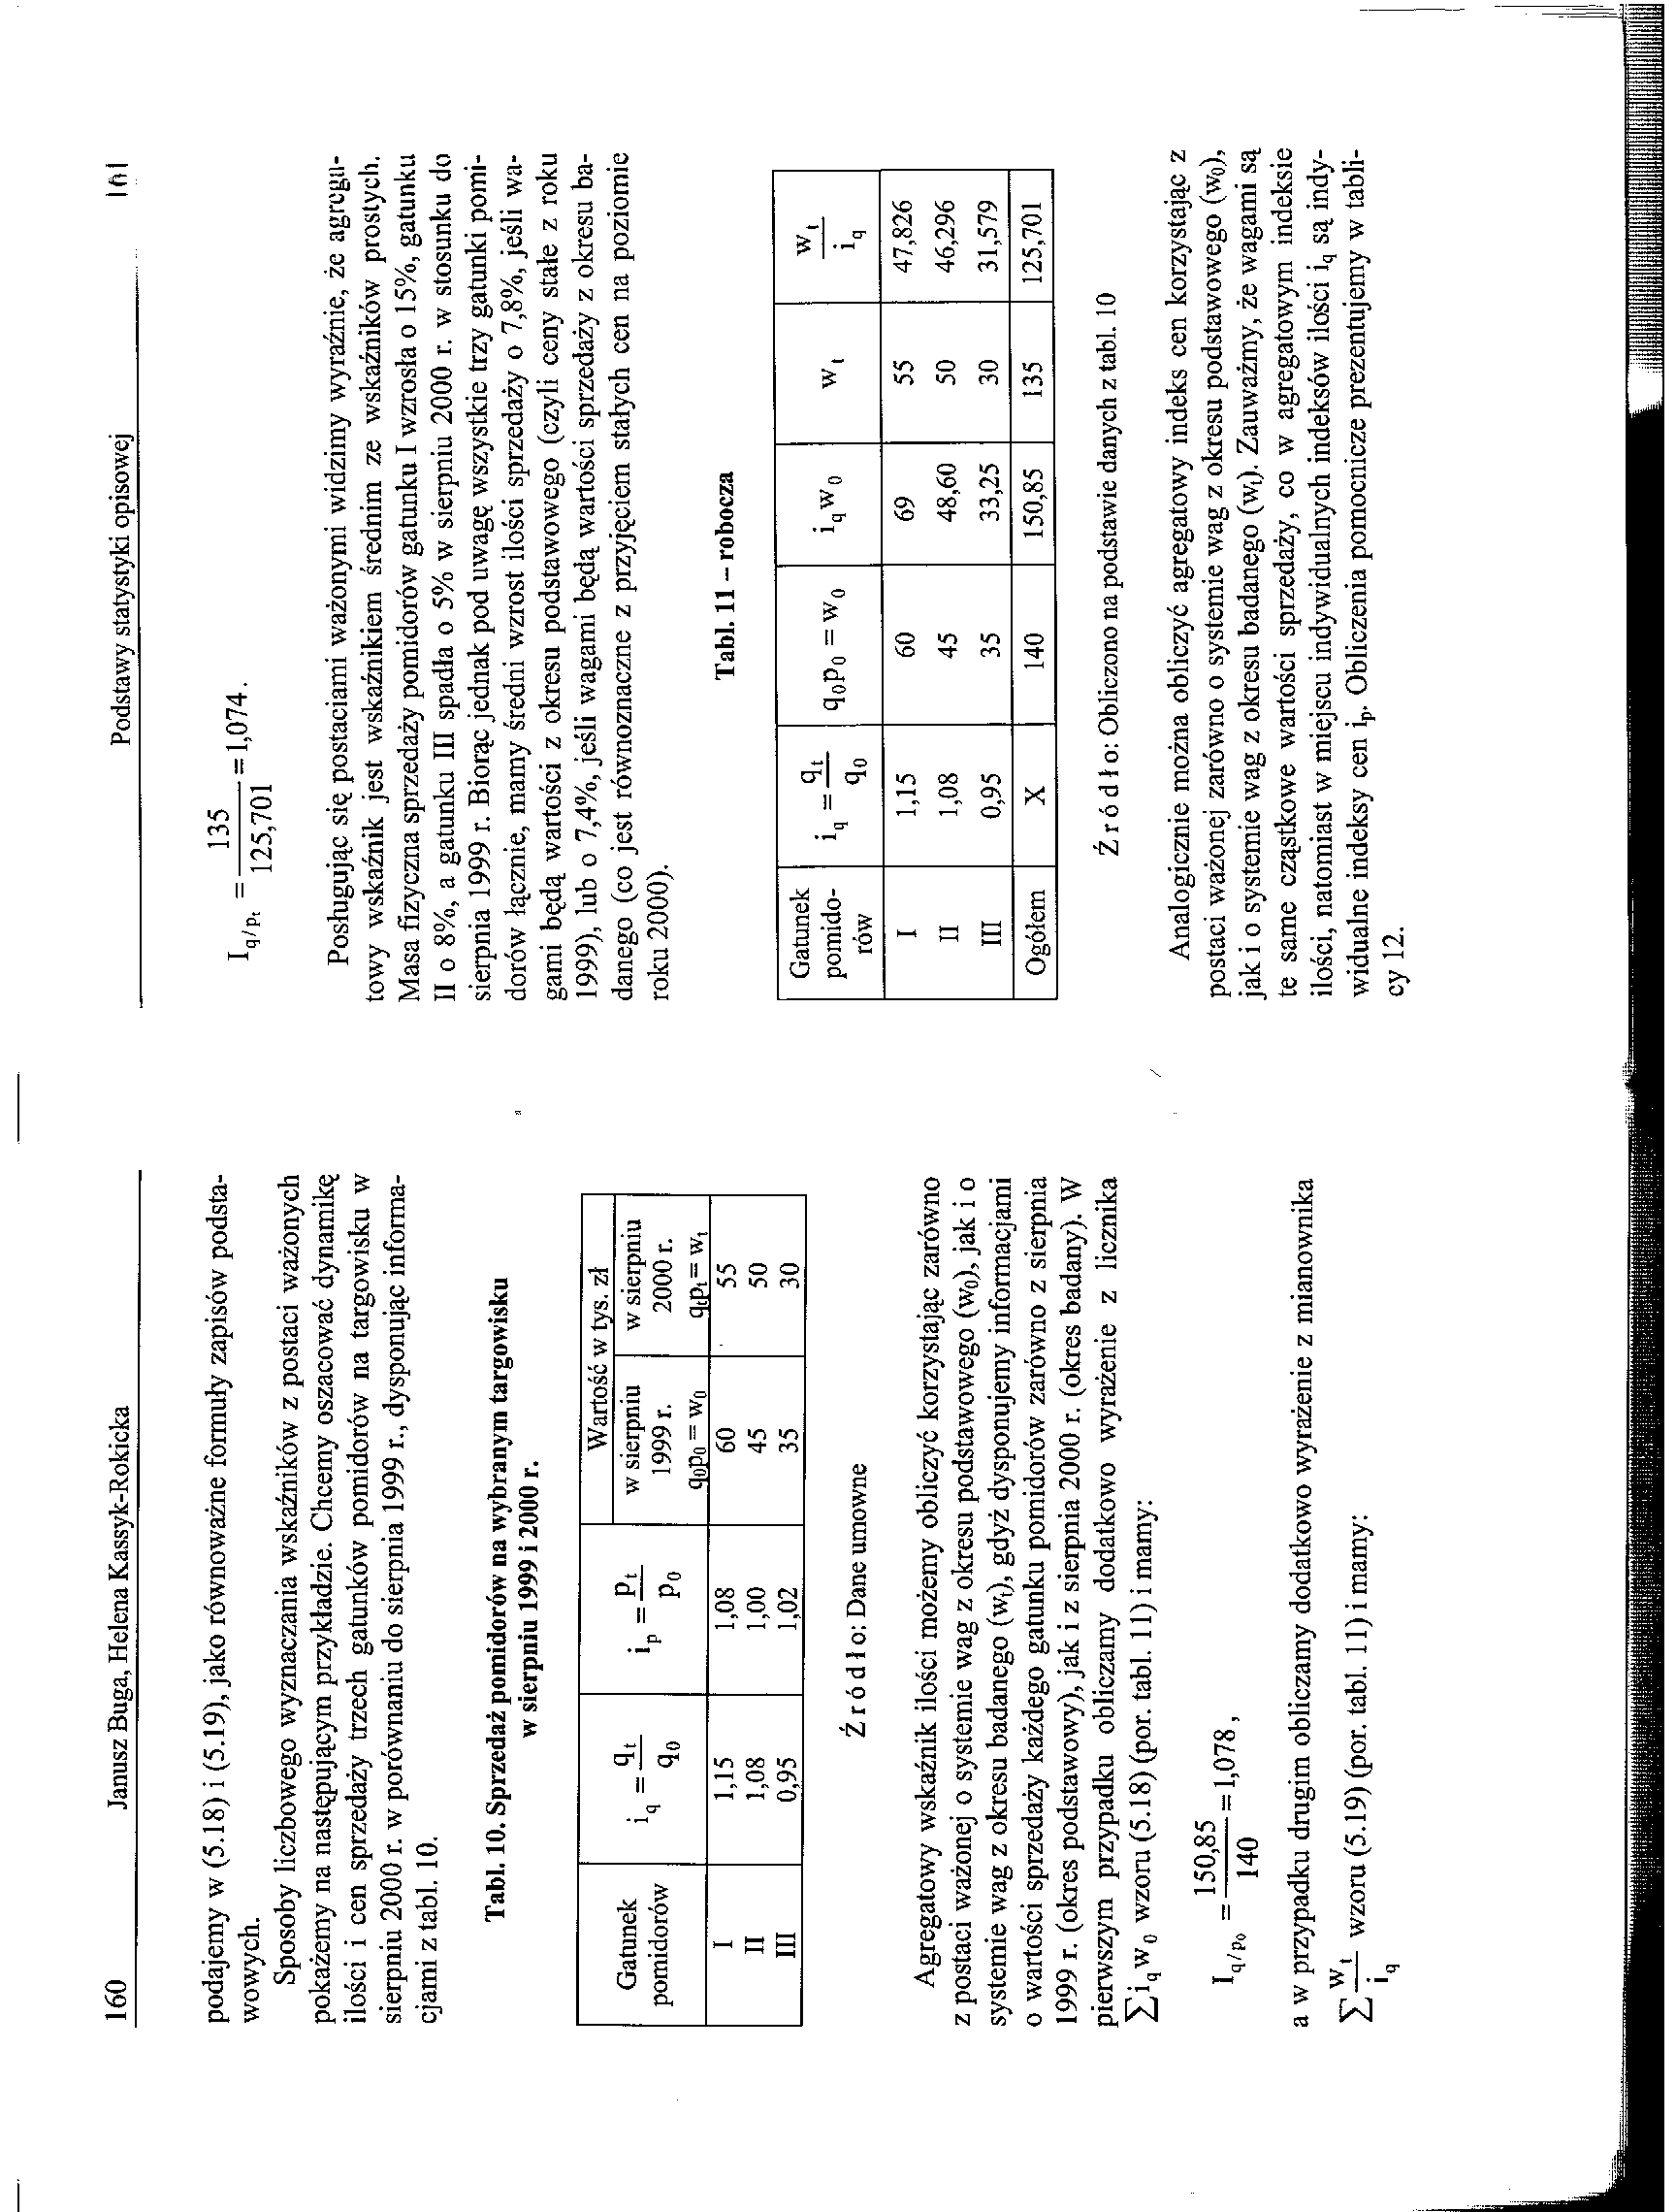 Statystyka - Książka - Xerox Phaser 3200MFP_20081126115019.tif